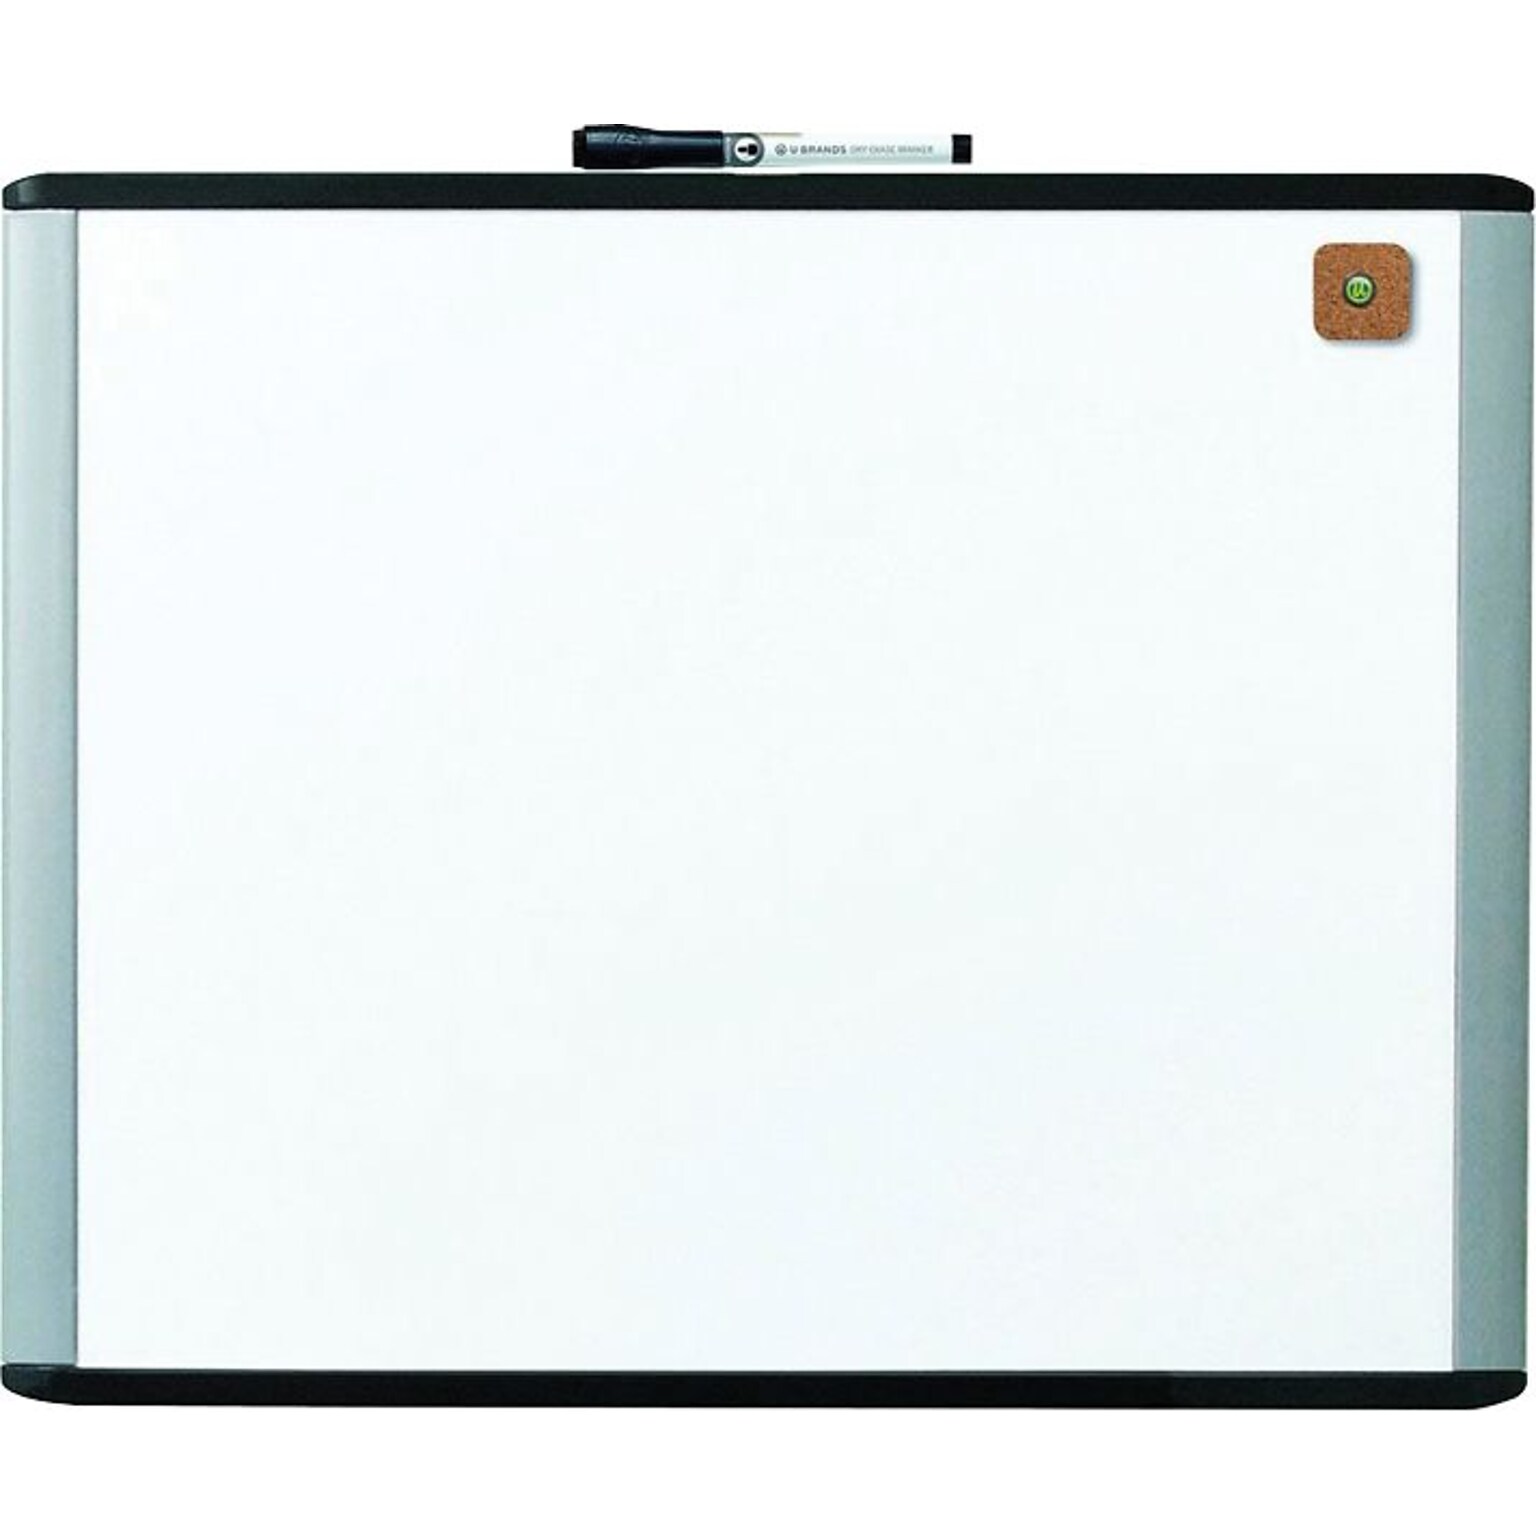 U Brands MOD Magnetic Dry Erase Whiteboard, 20 x 16 (381U00-01)